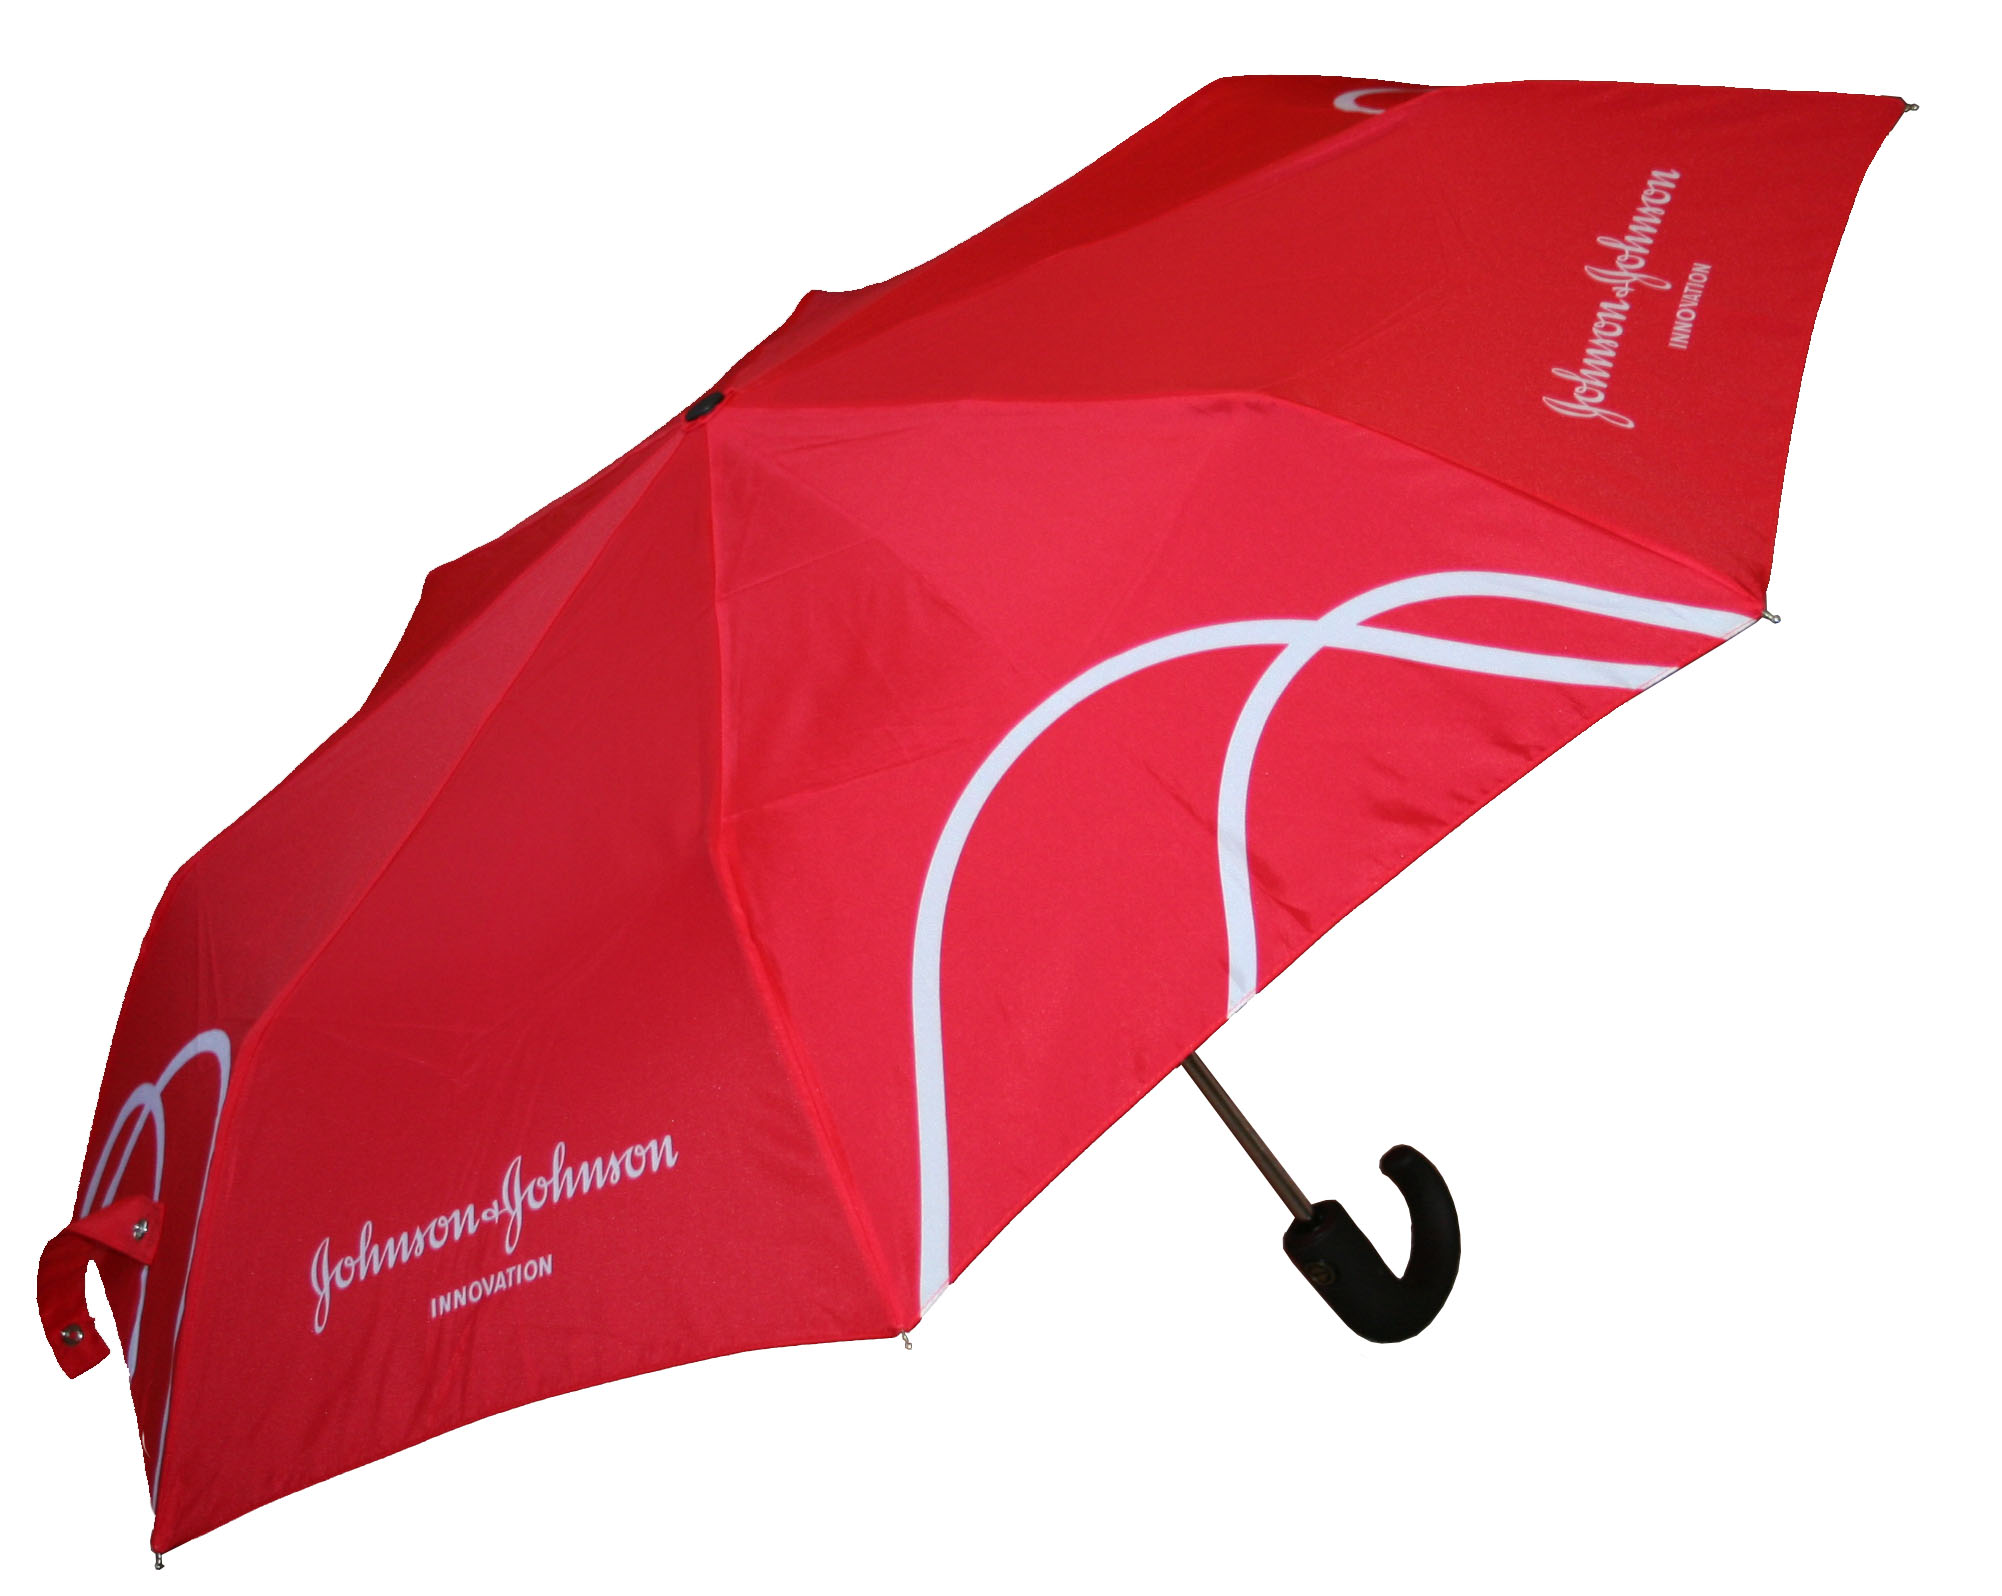 Red and white branded logo umbrella